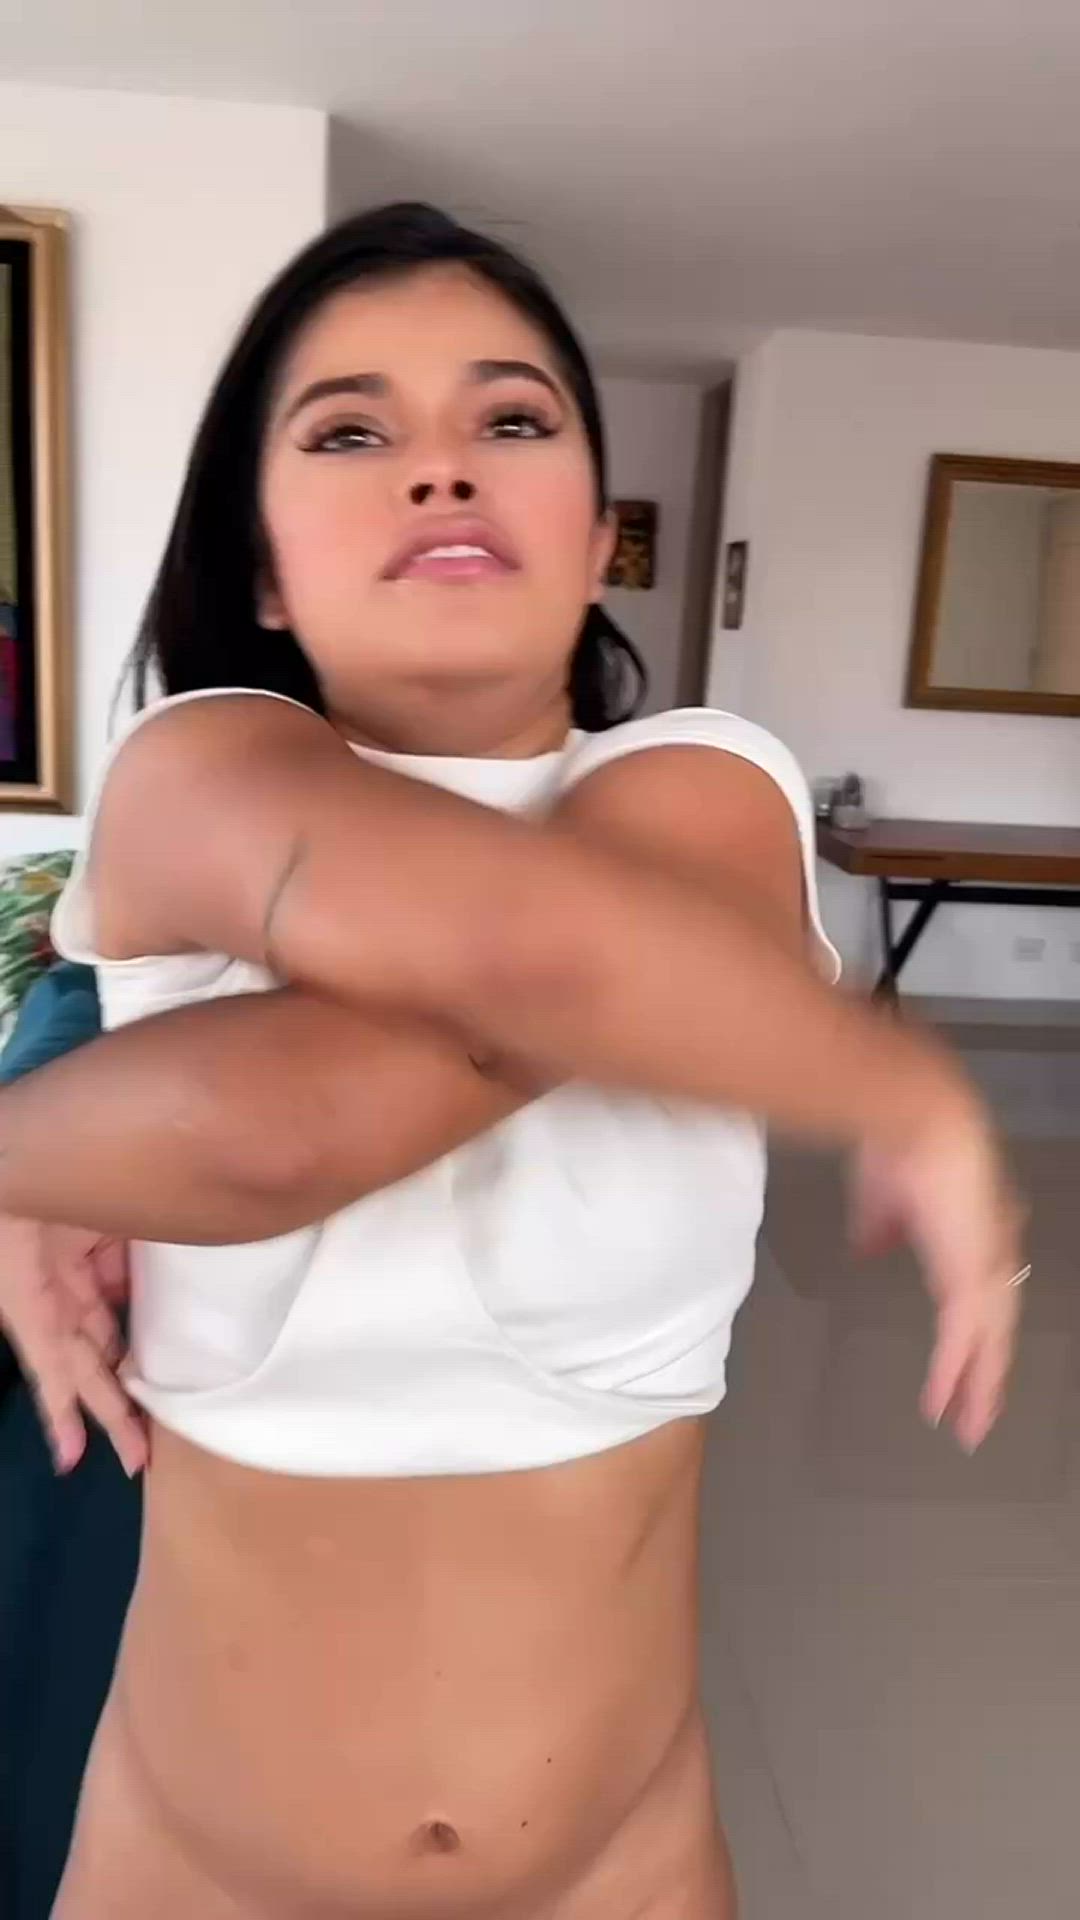 Latina porn video with onlyfans model malamorena <strong>@mala_morena</strong>